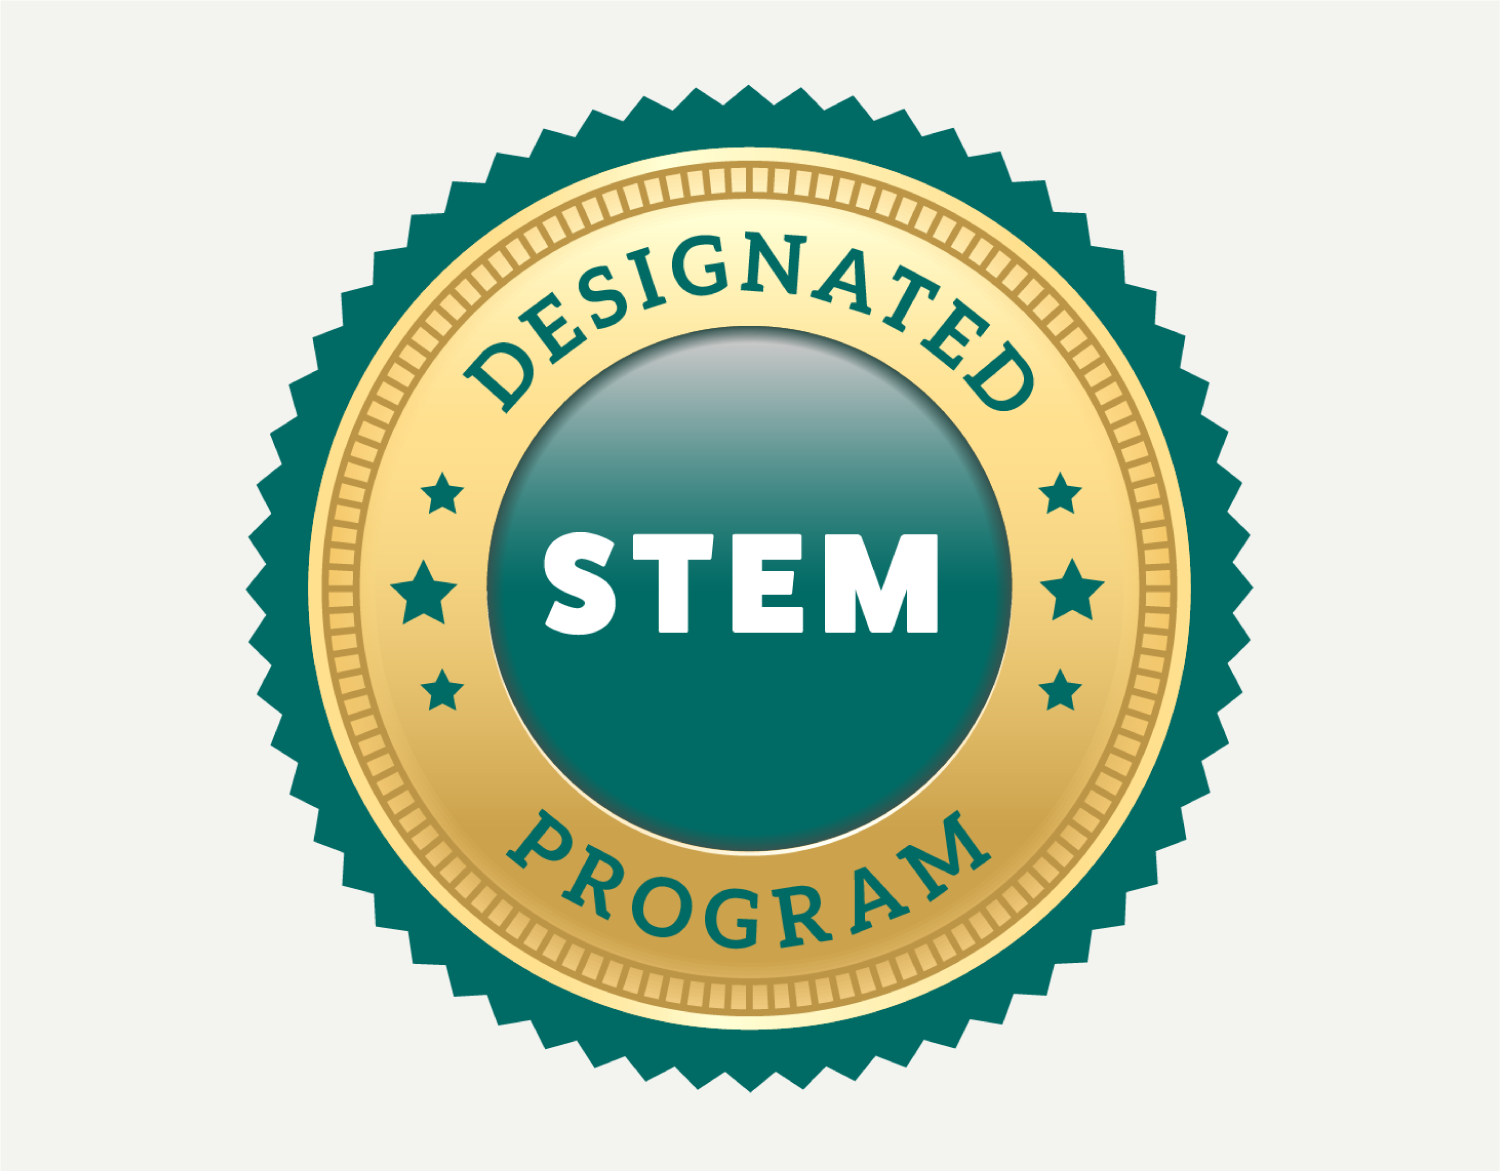 STEM designated program logo, teal and gold with STEM text